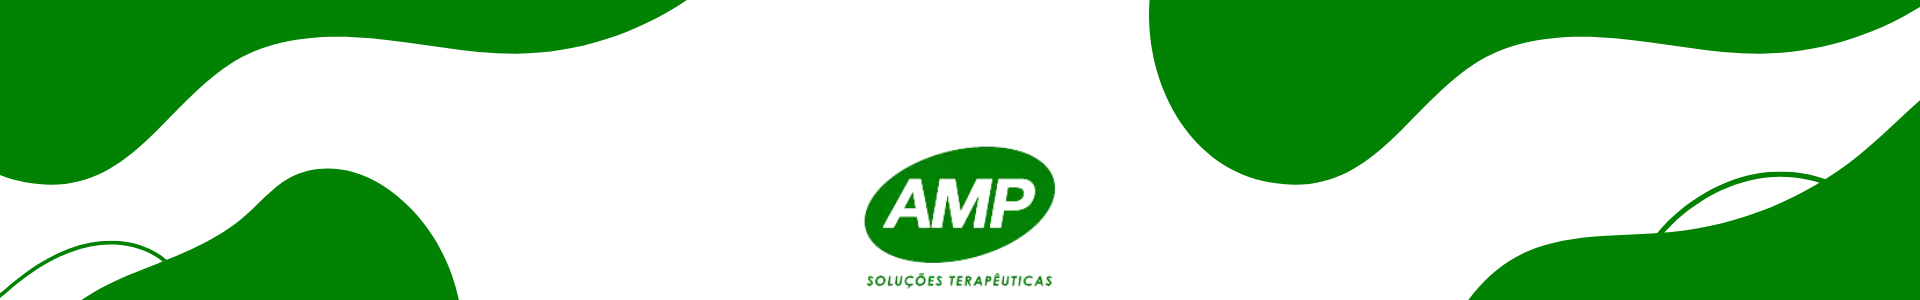 Marca AMP Produtos Terapêuticos